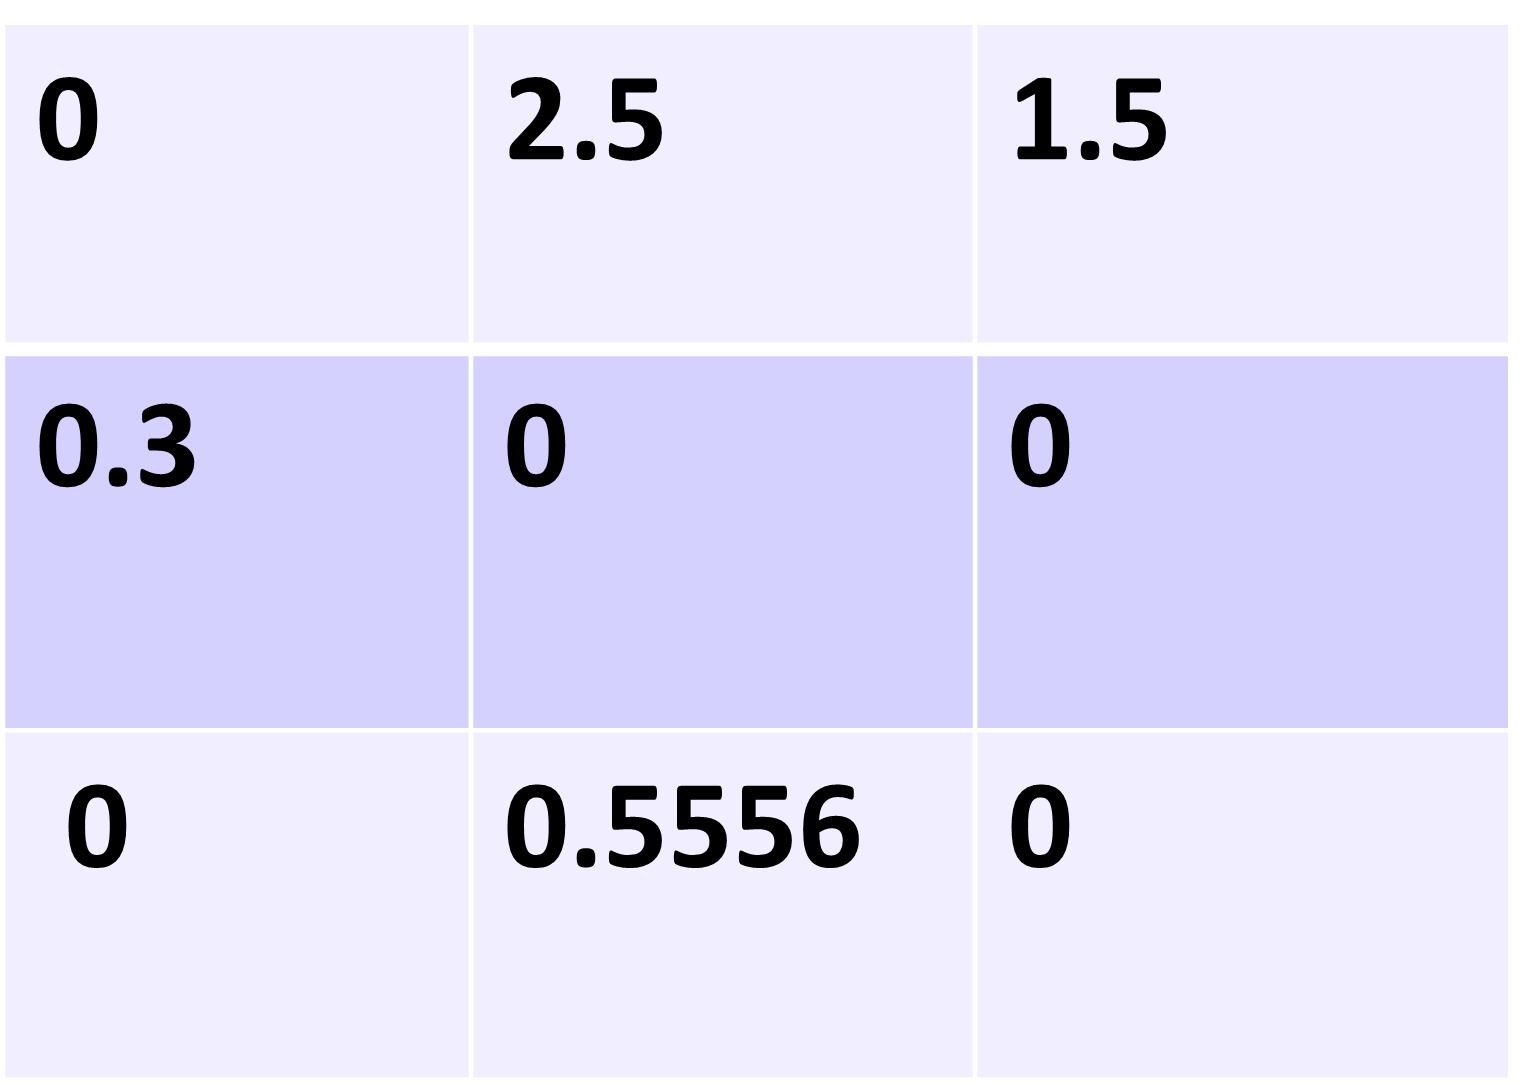 First row: 0, 2.5, 1.5 Second row: 0.3, 0, 0 Third row: 0, 0.5556, 0